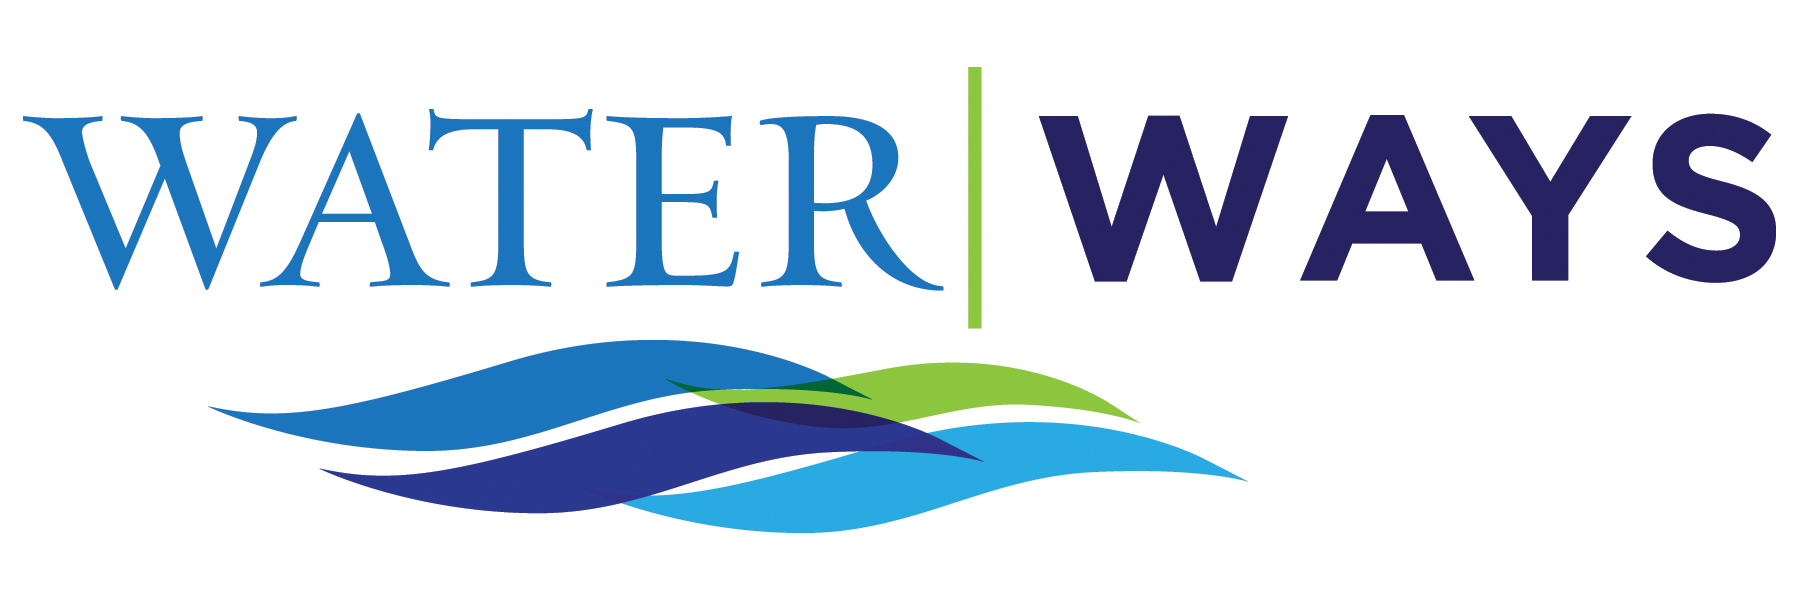 The Water/Ways logo